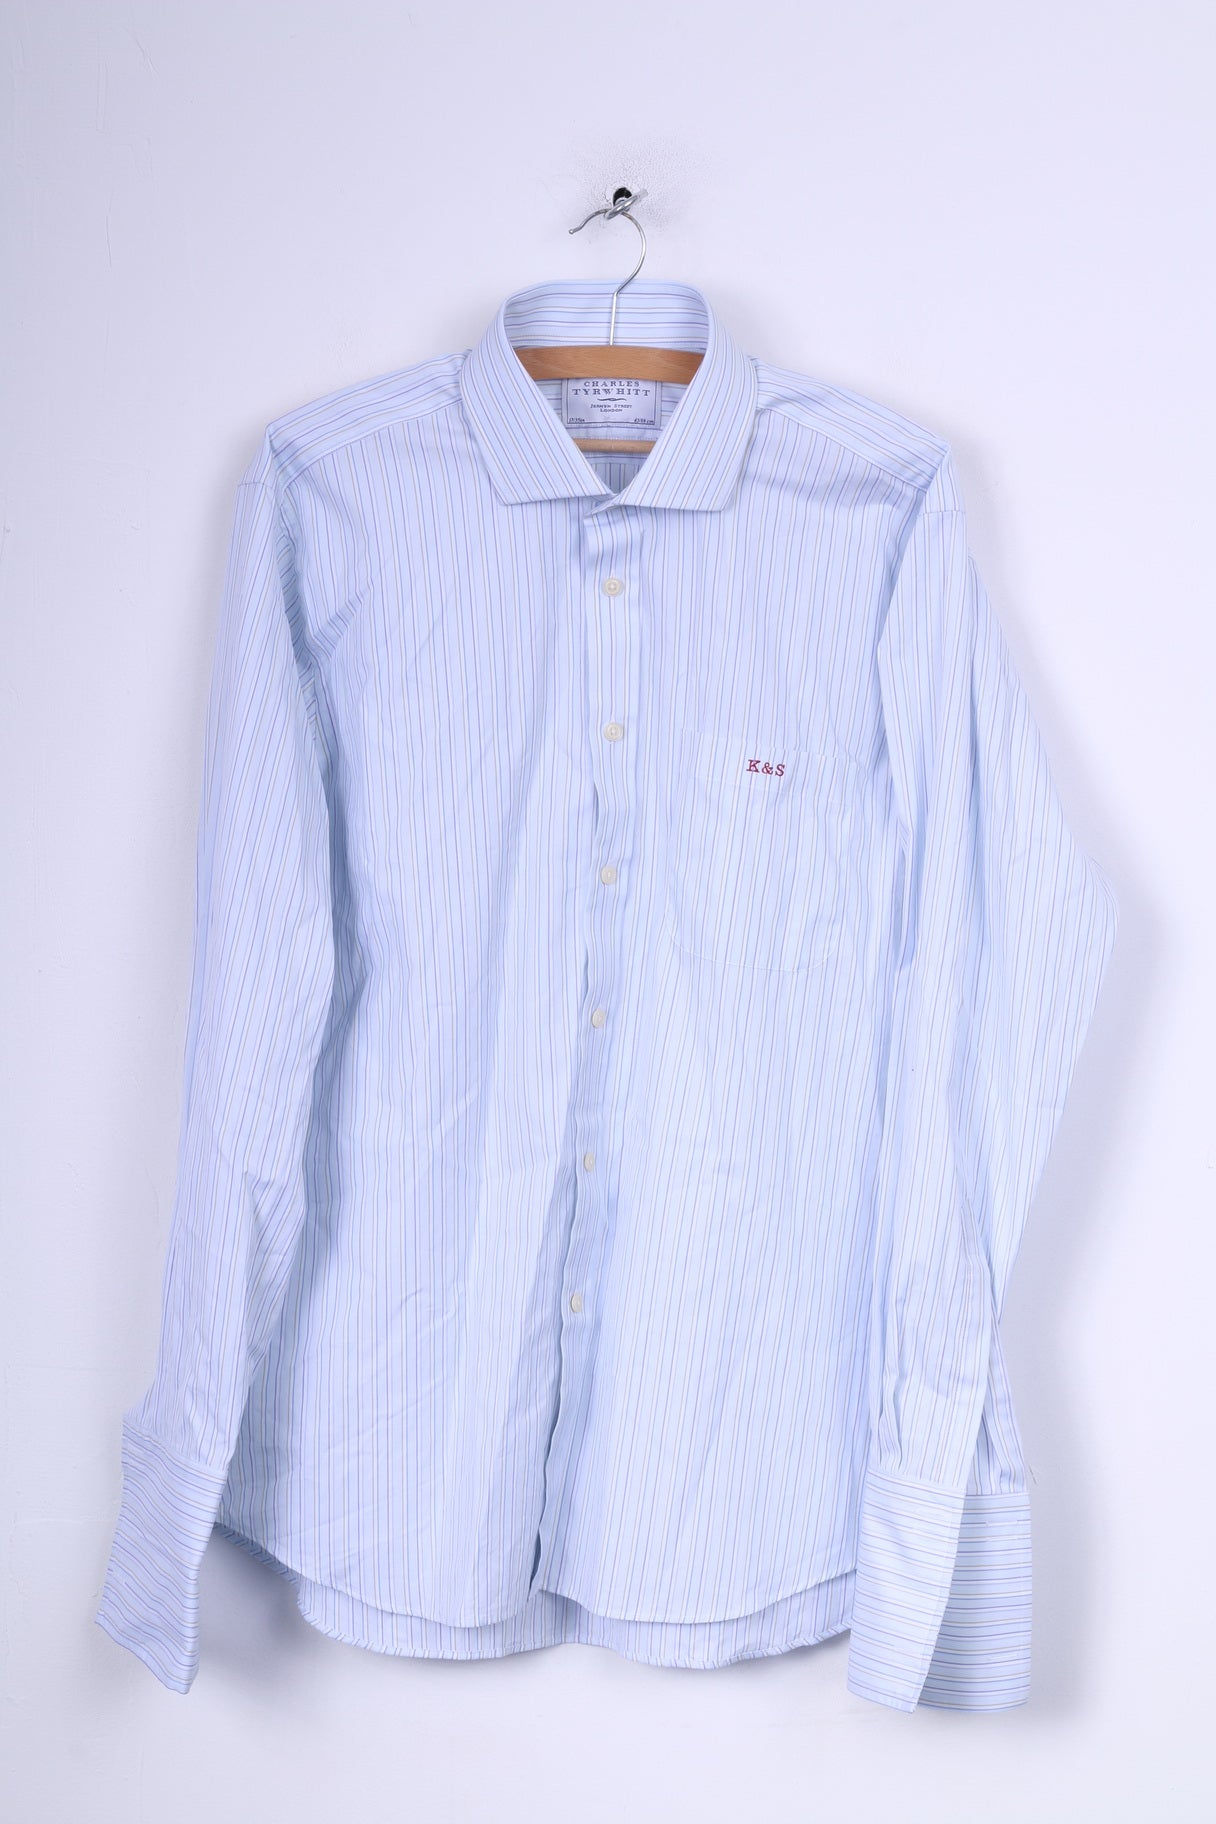 Charles Tyrwhitt Mens 17 43 Formal Shirt Slim Fit Striped Blue ...